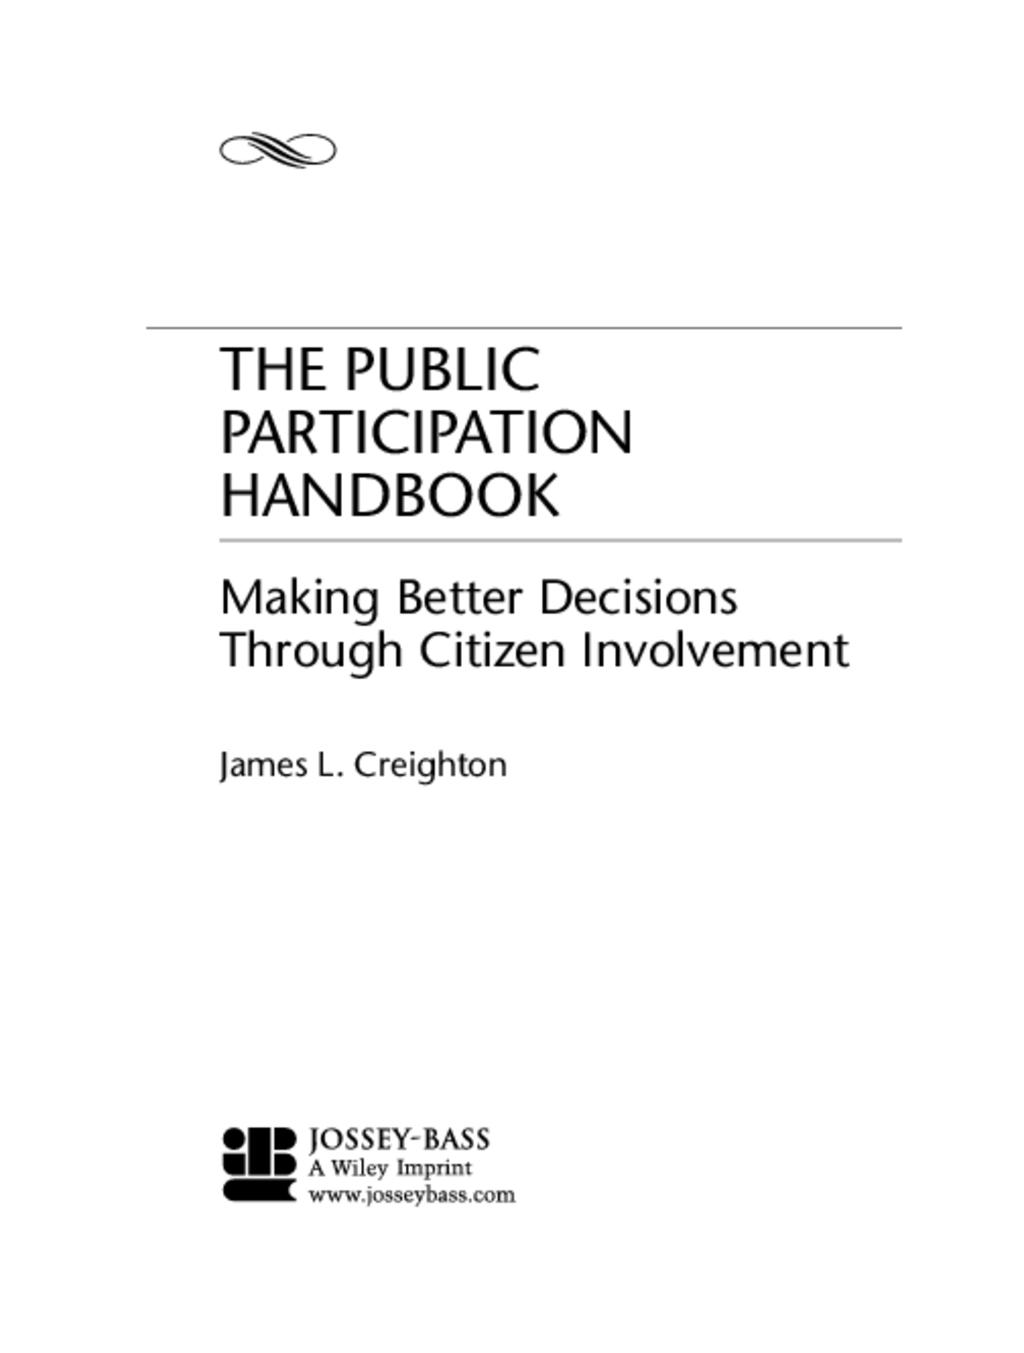 The Public Participation Handbook: Making Better Decisions Through Citizen Involvement